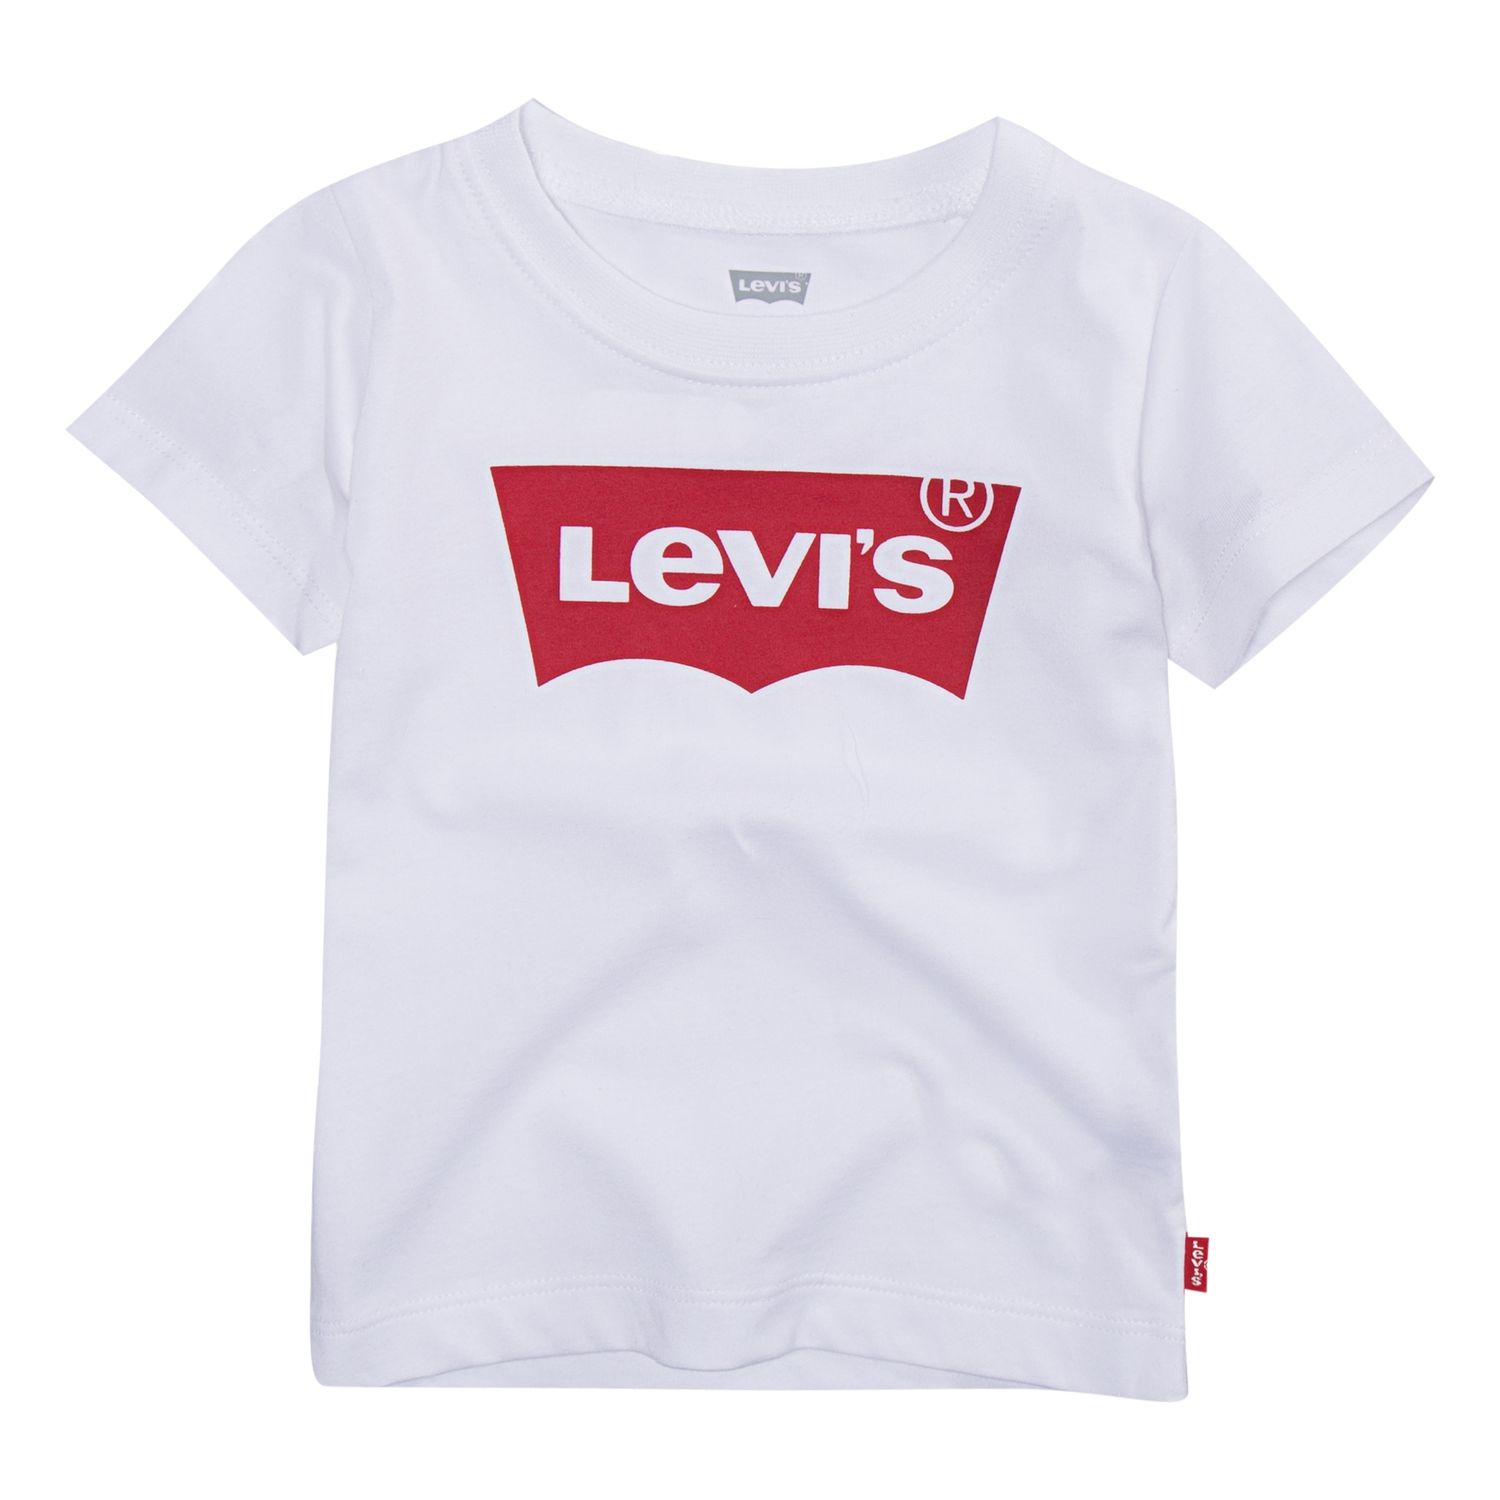 levis shirt price